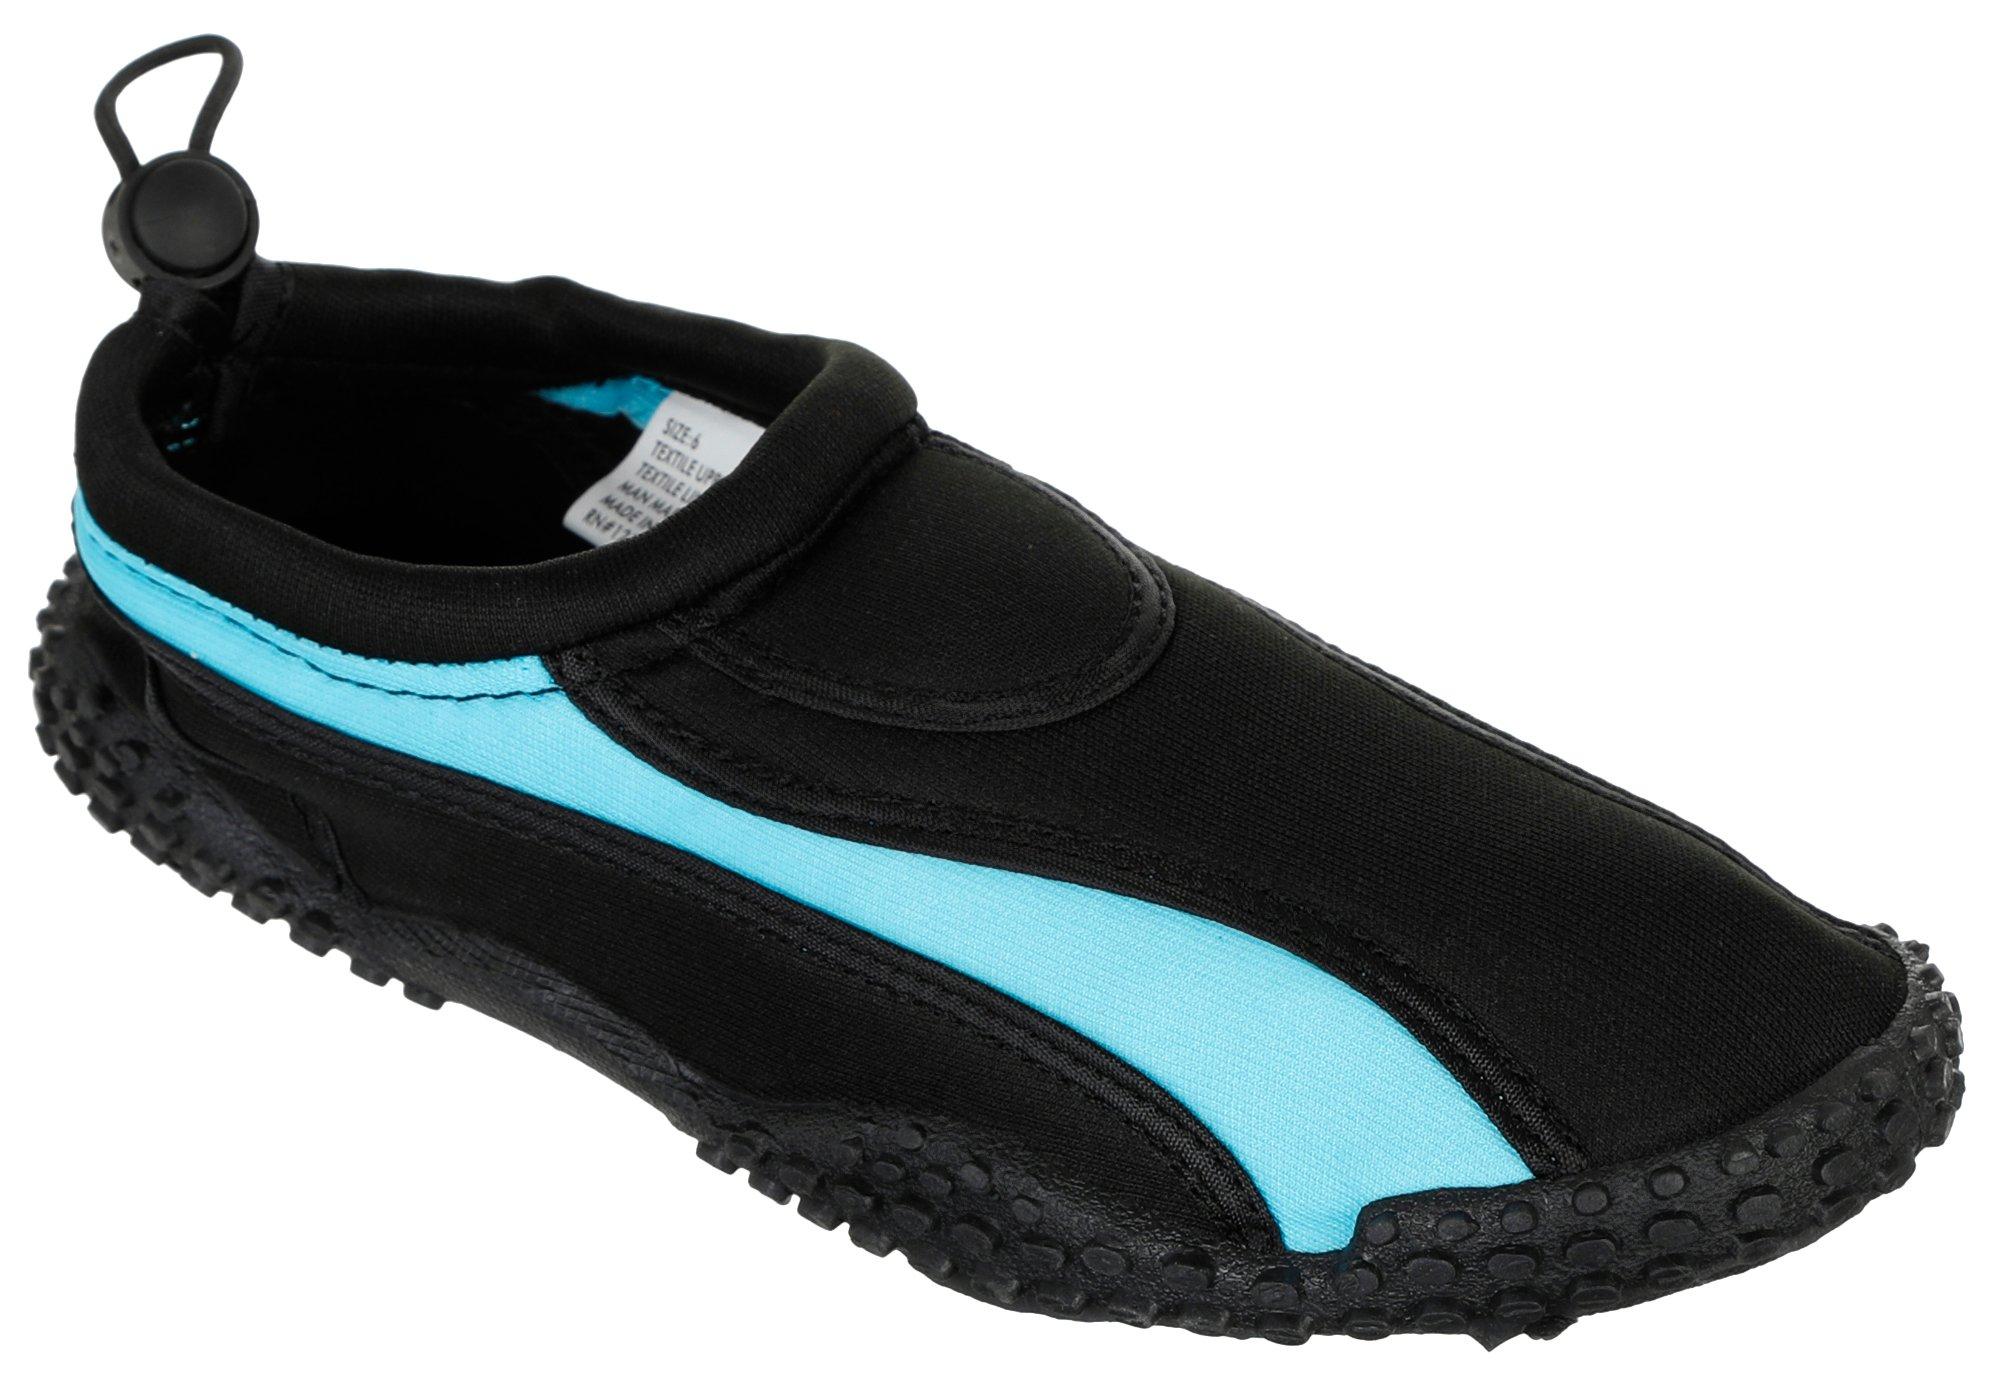 Neoprene Slip-On Water Shoes - Aqua | Burkes Outlet